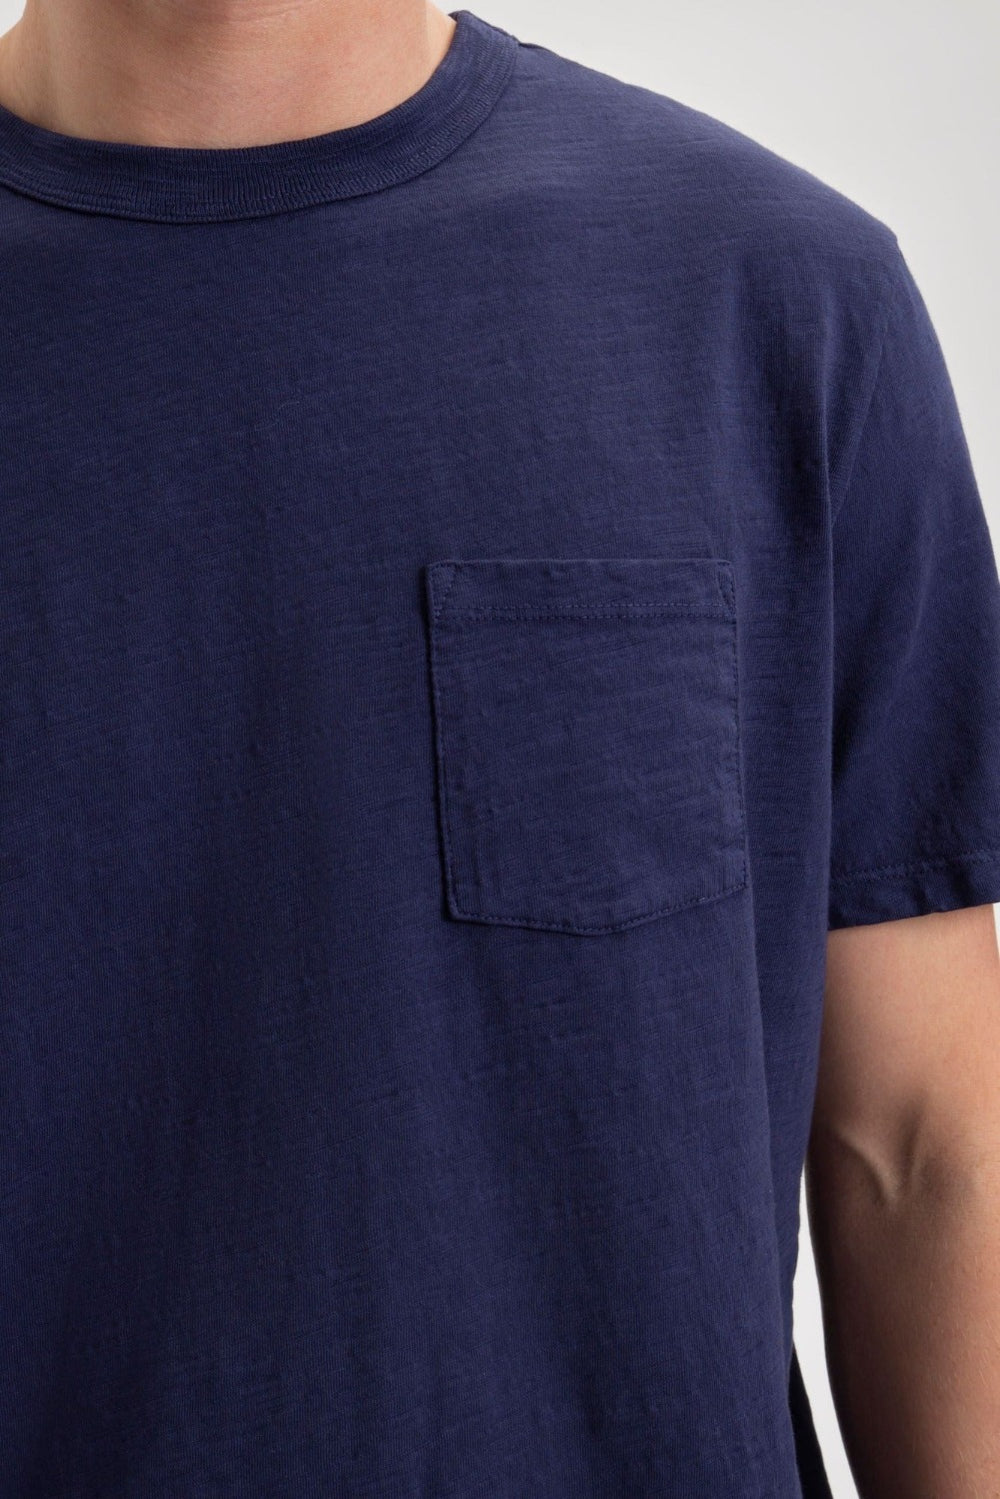 Garment Dye Beatnik Short-Sleeve T-Shirt - Navy Indigo